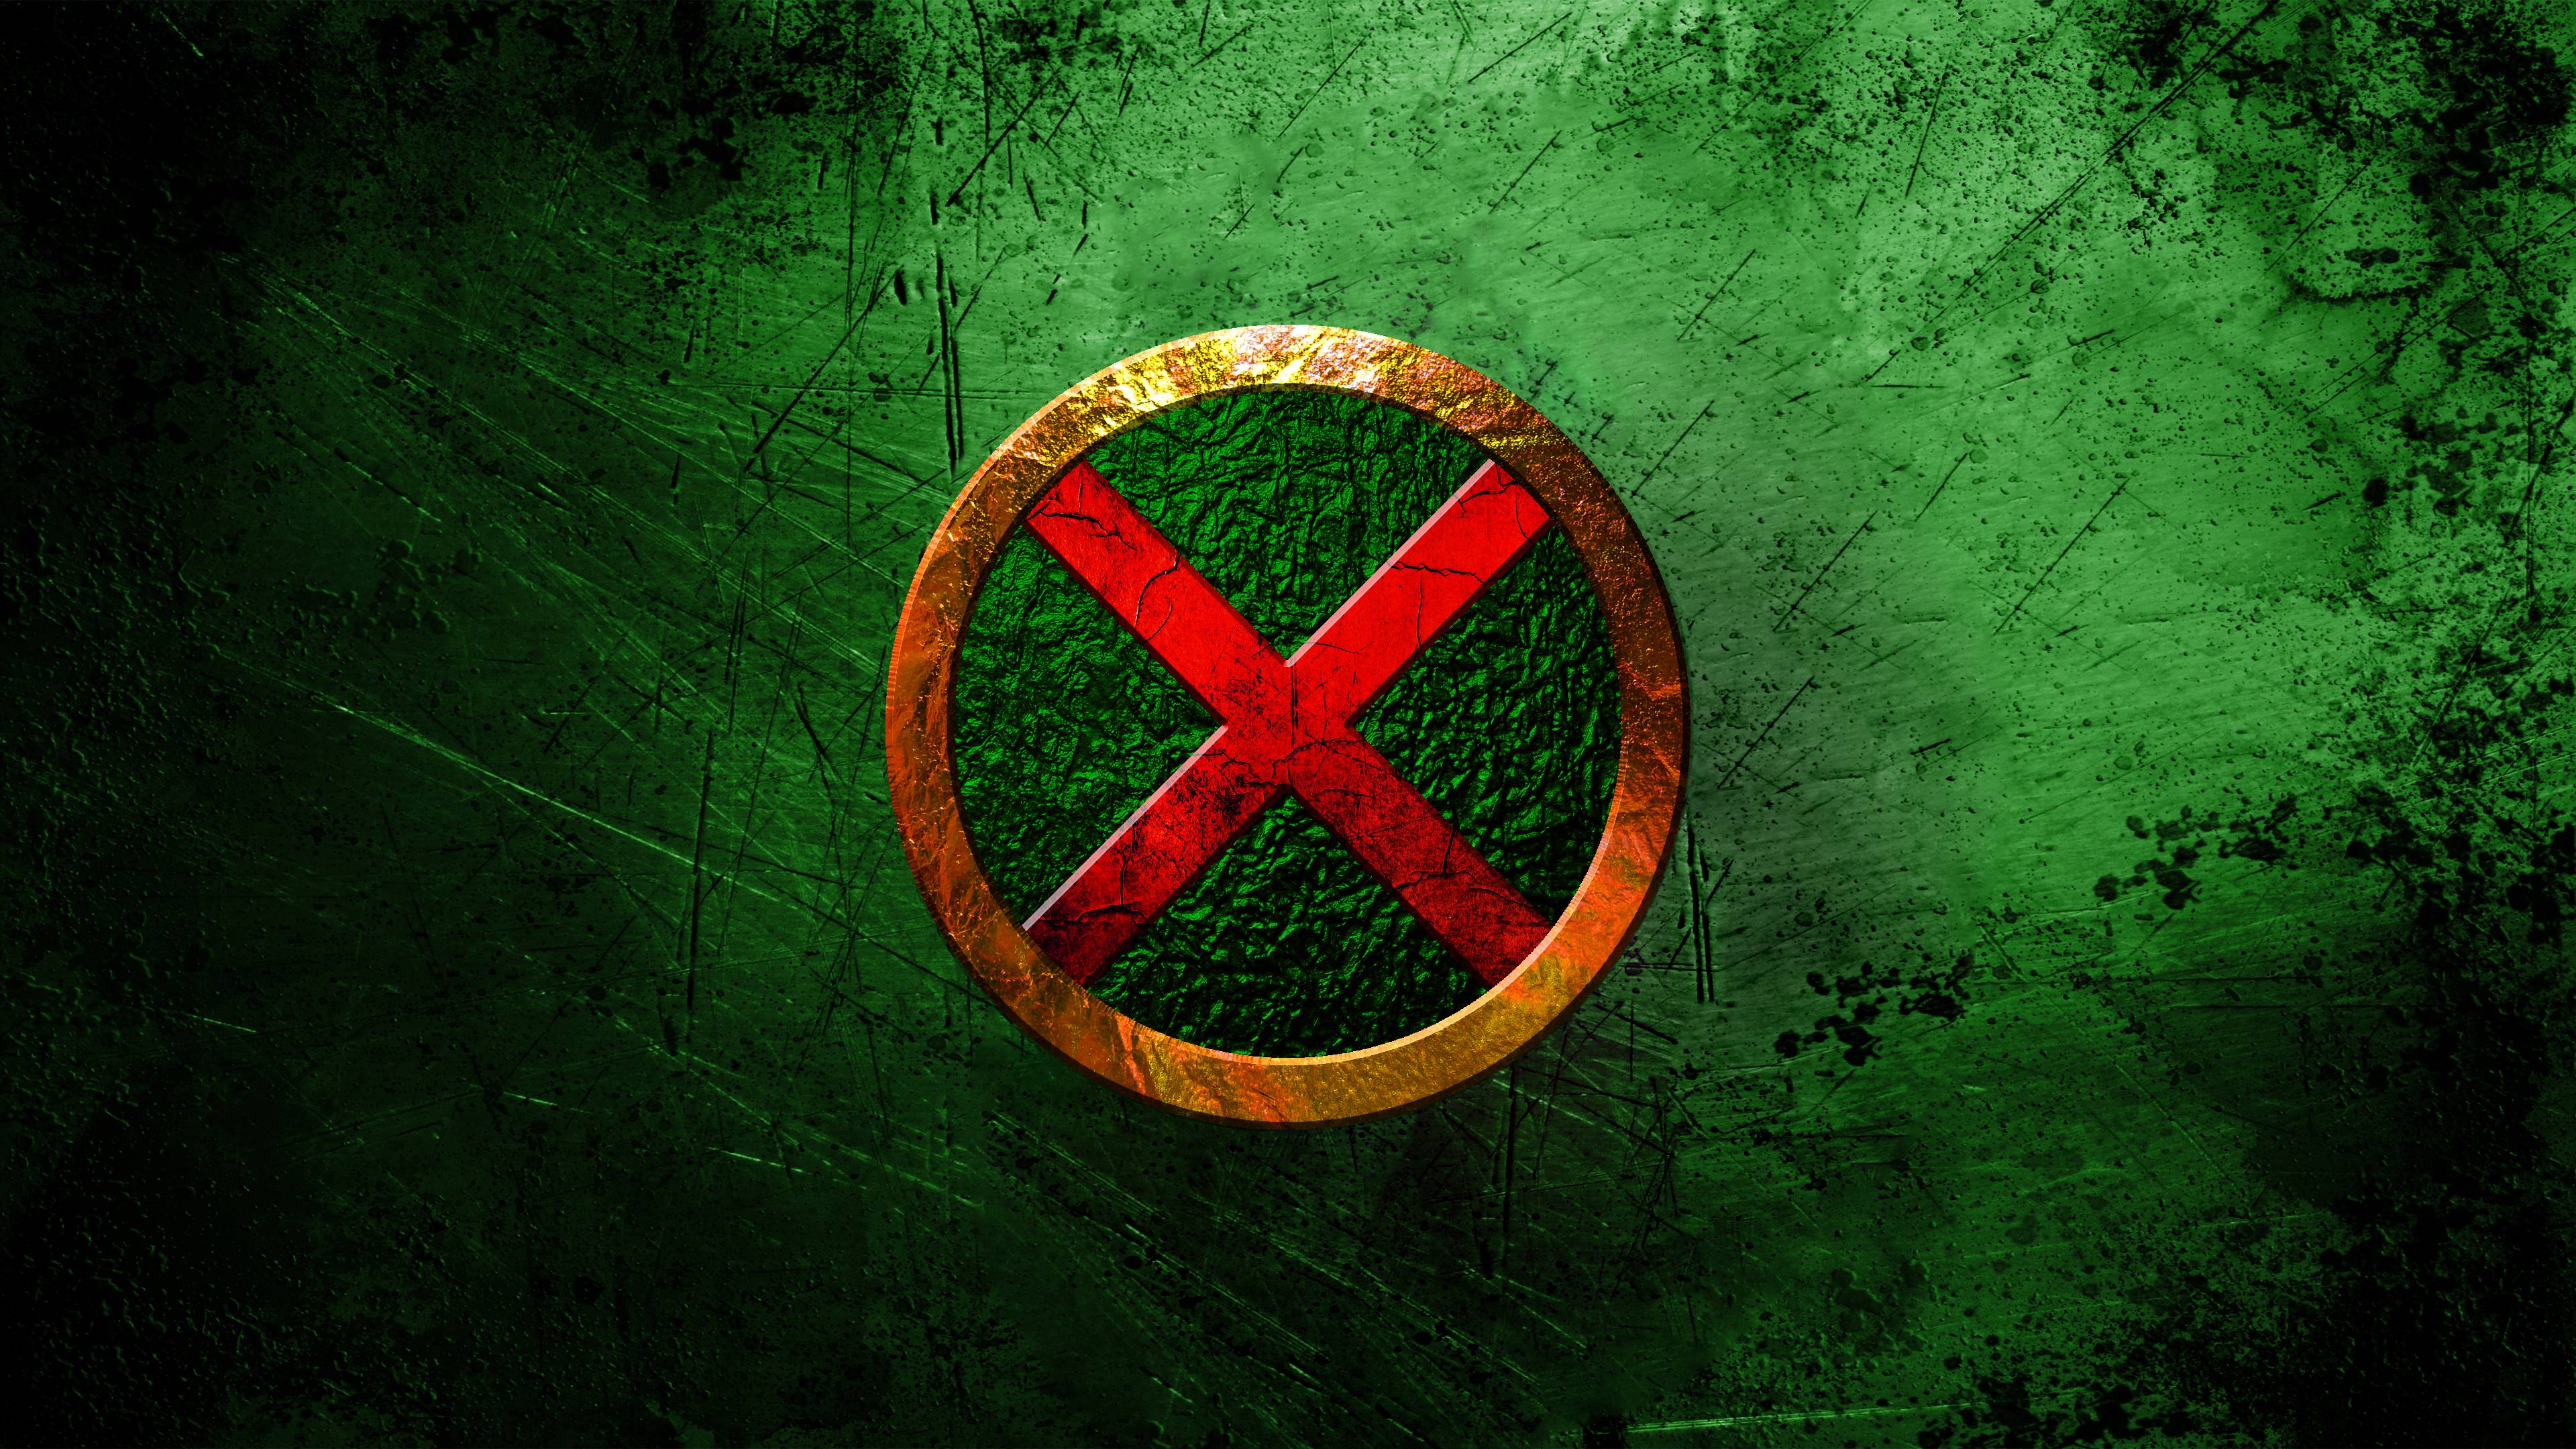 martian manhunter wallpaper,green,flag,symbol,emblem,circle